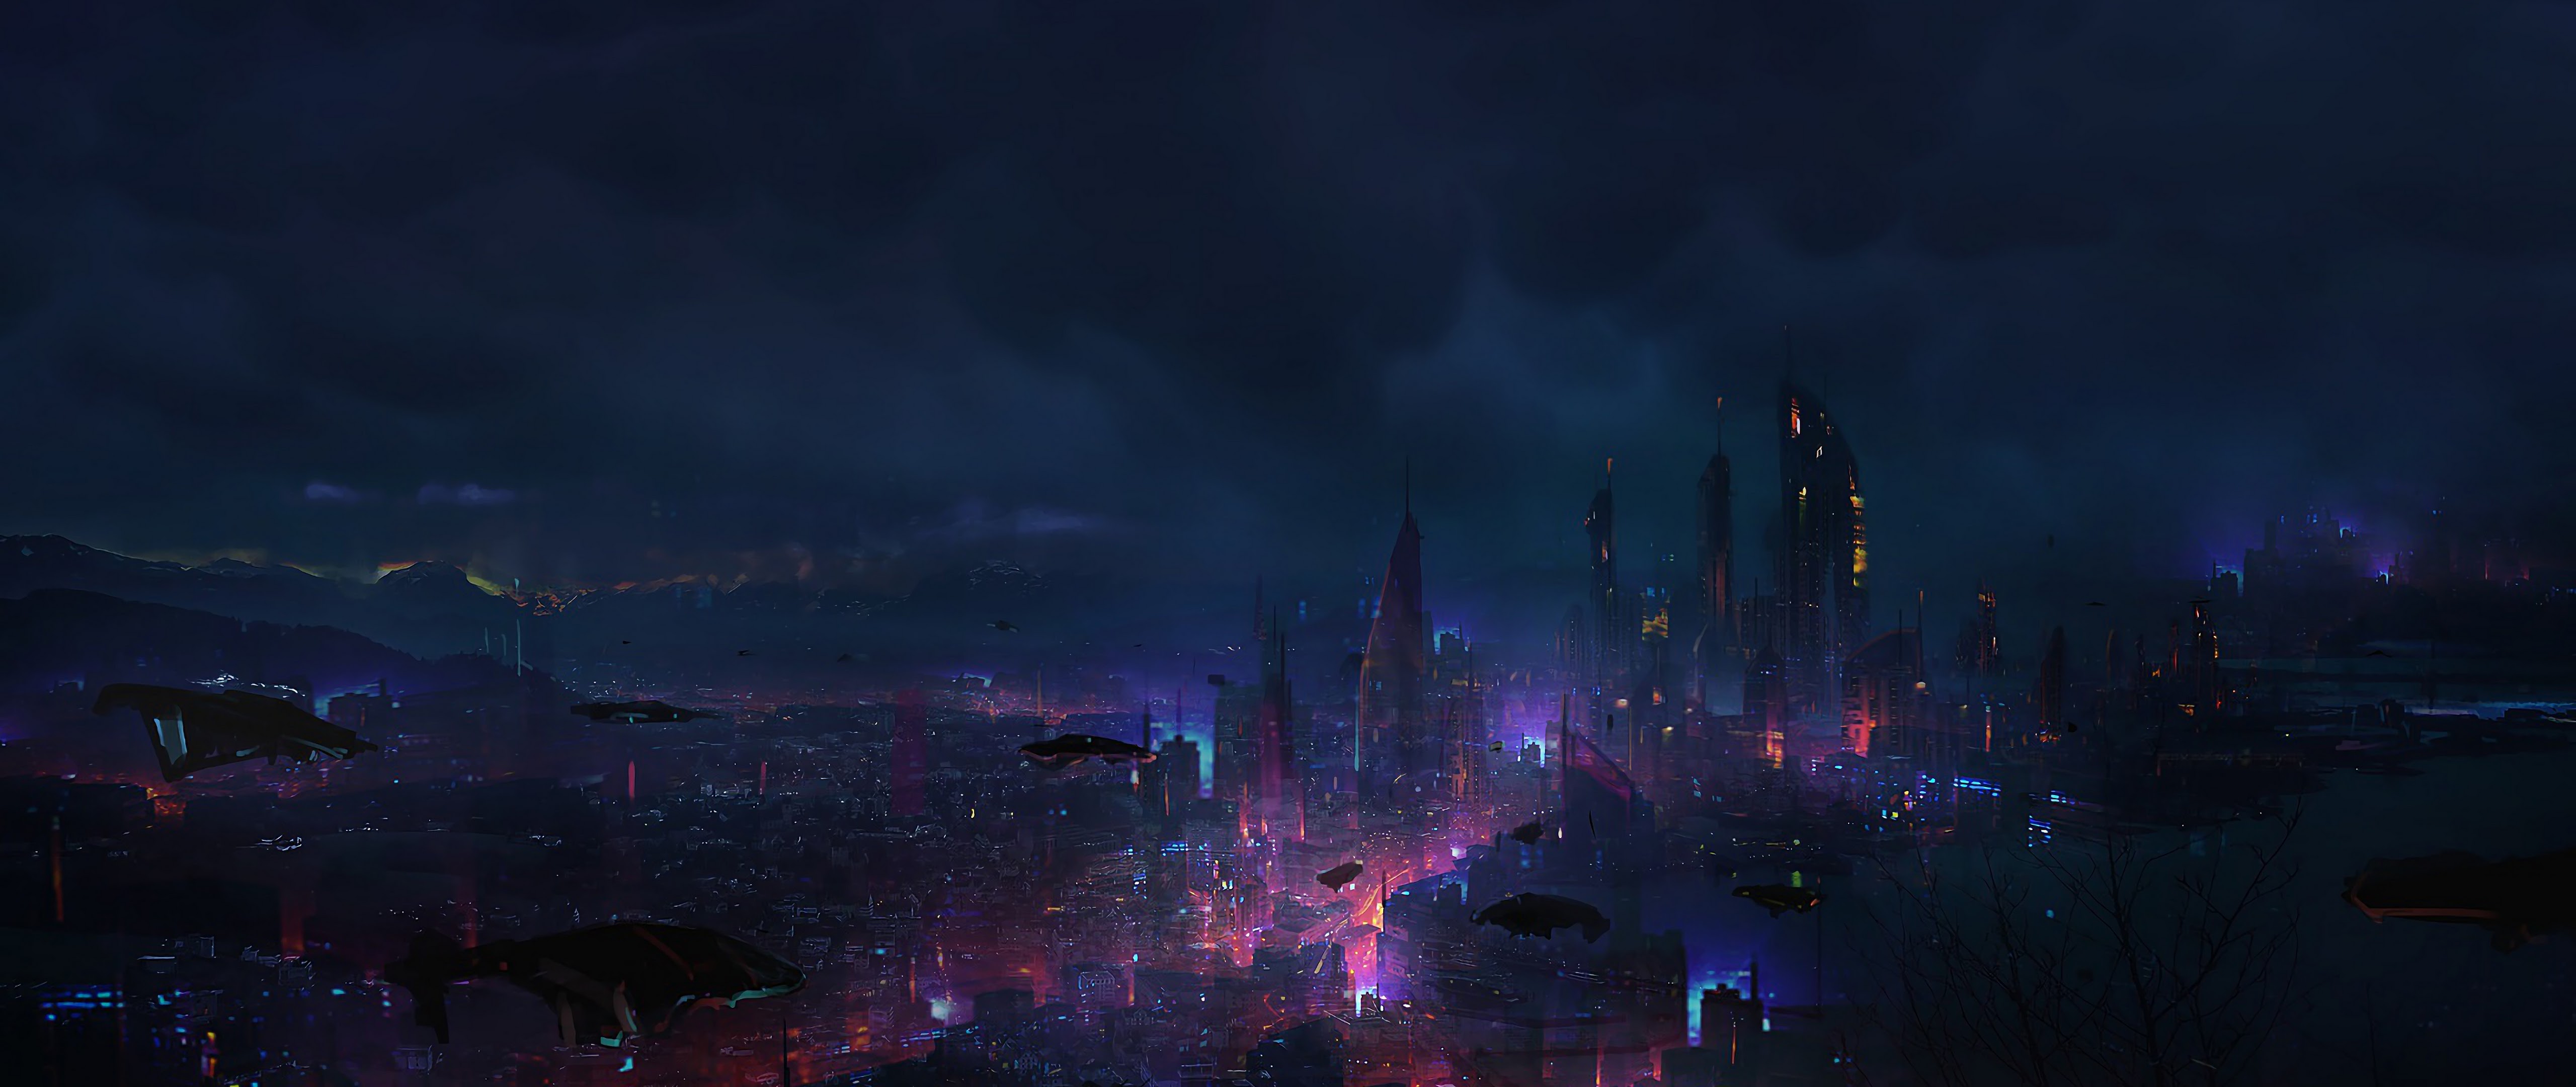 Free download Cyberpunk City Night Scenery Sci Fi 4K - Cyberpunk City: \